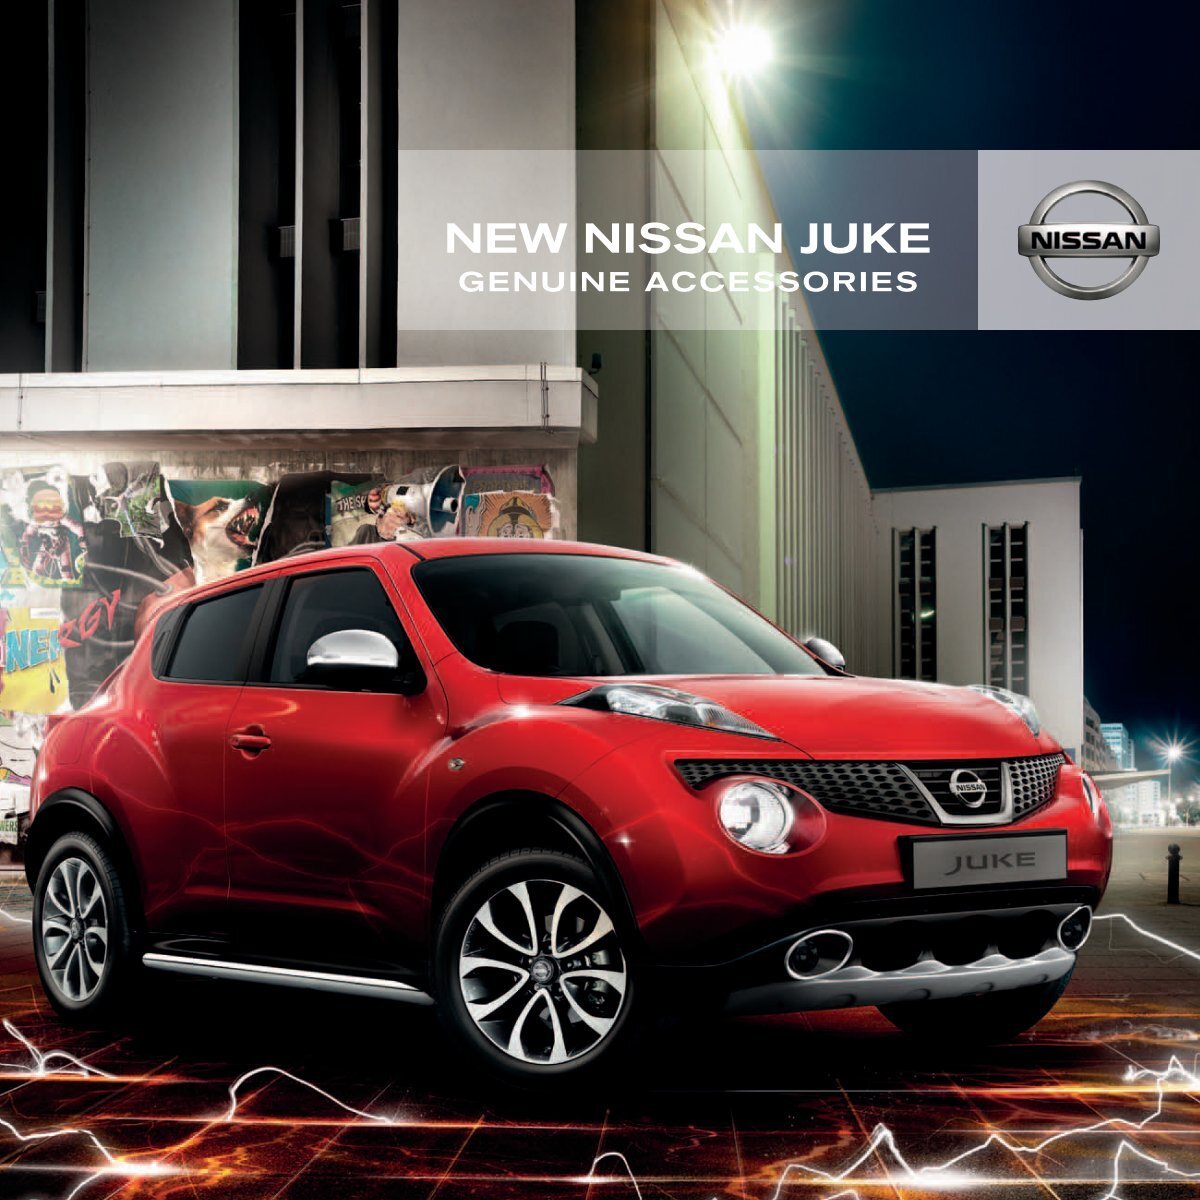 Nissan Juke Accessories, Genuine Nissan